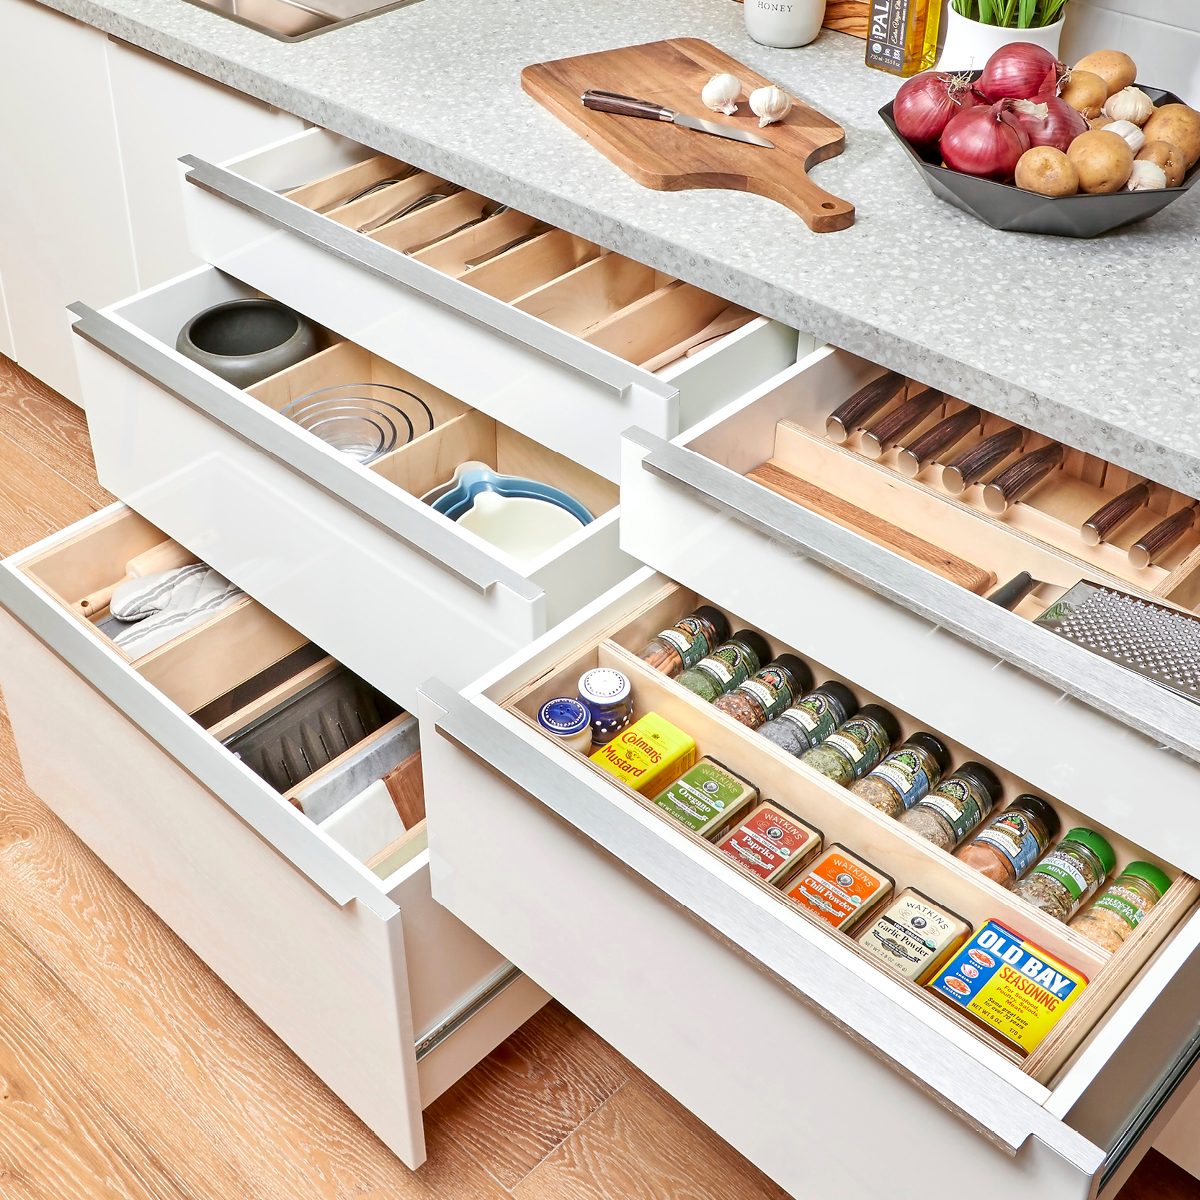 Organized kitchen drawers 